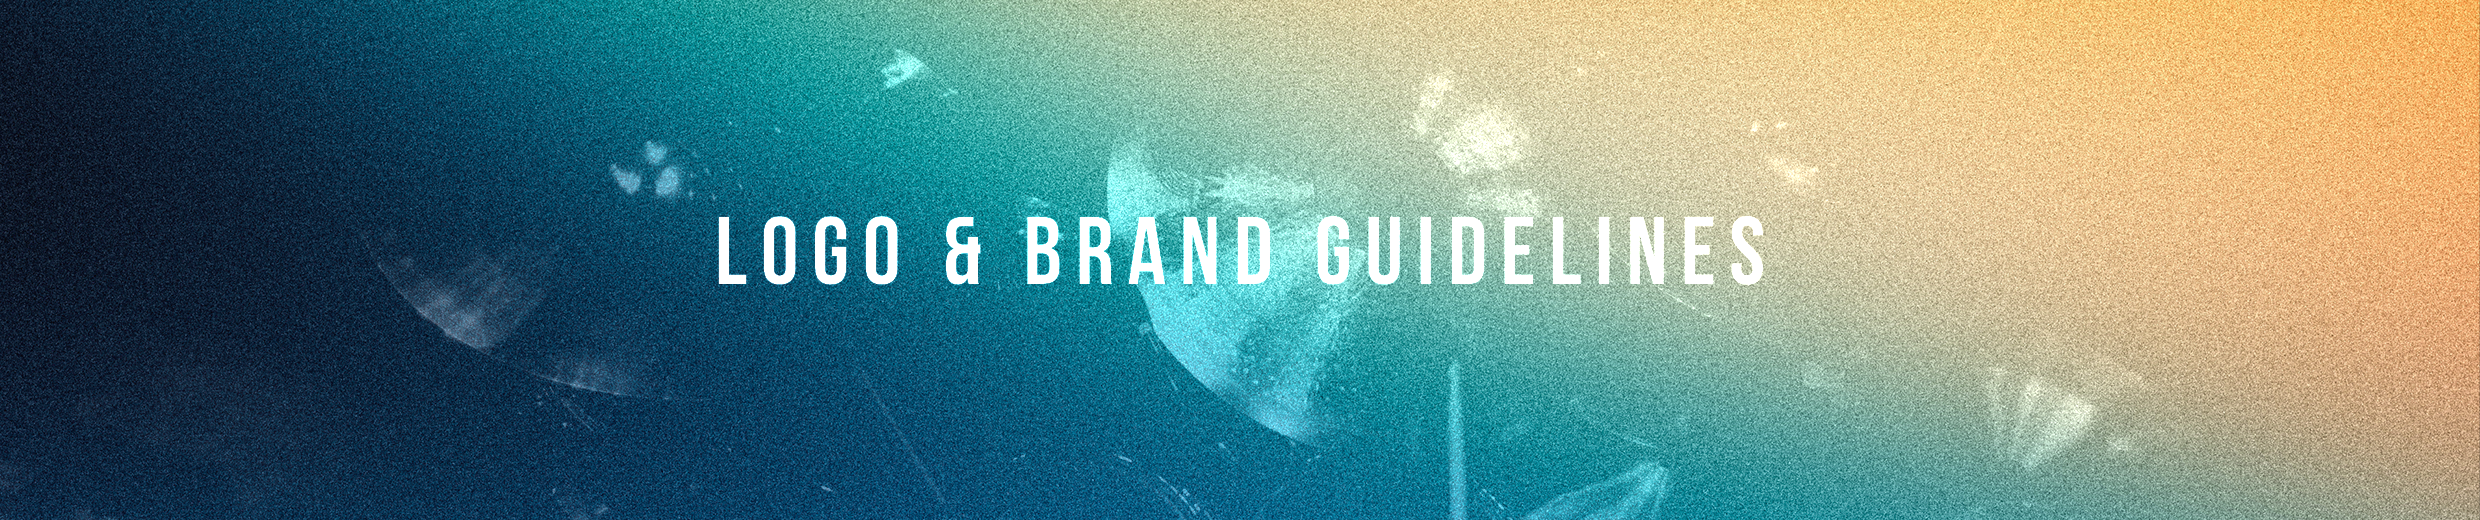 Logo & Brand Guidelines header image